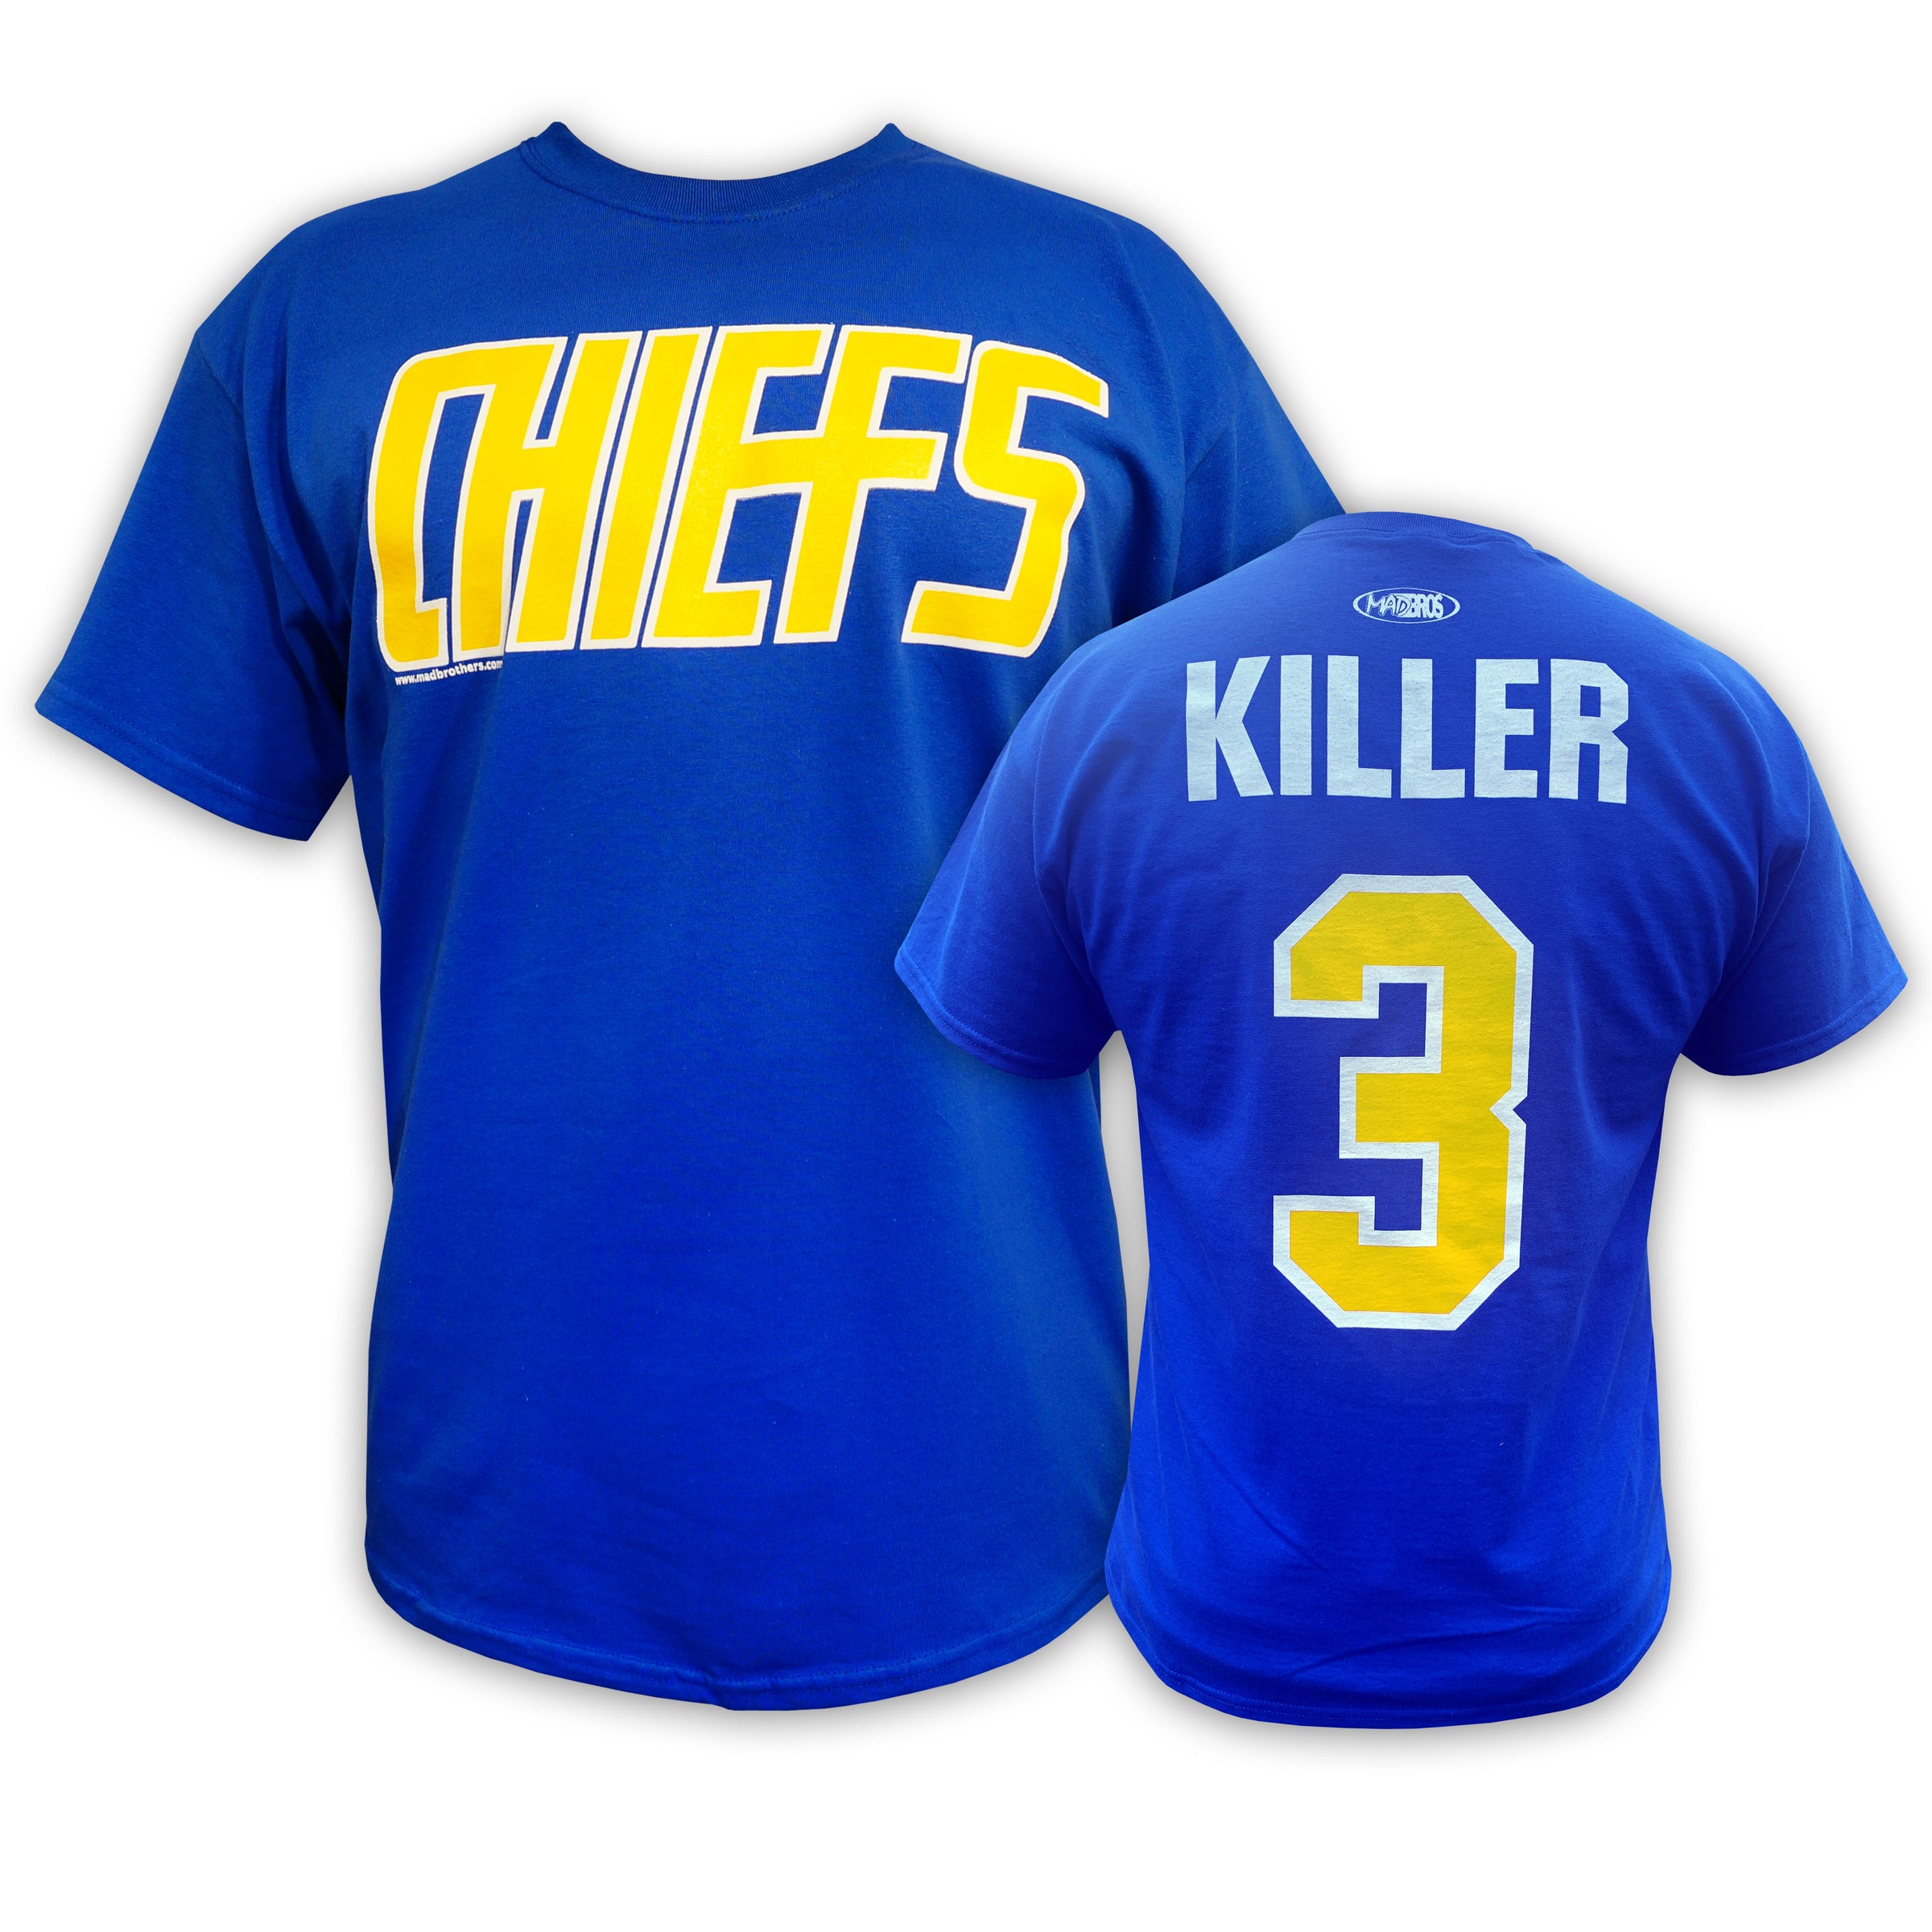 #3 KILLER Charlestown CHIEFS T-shirt